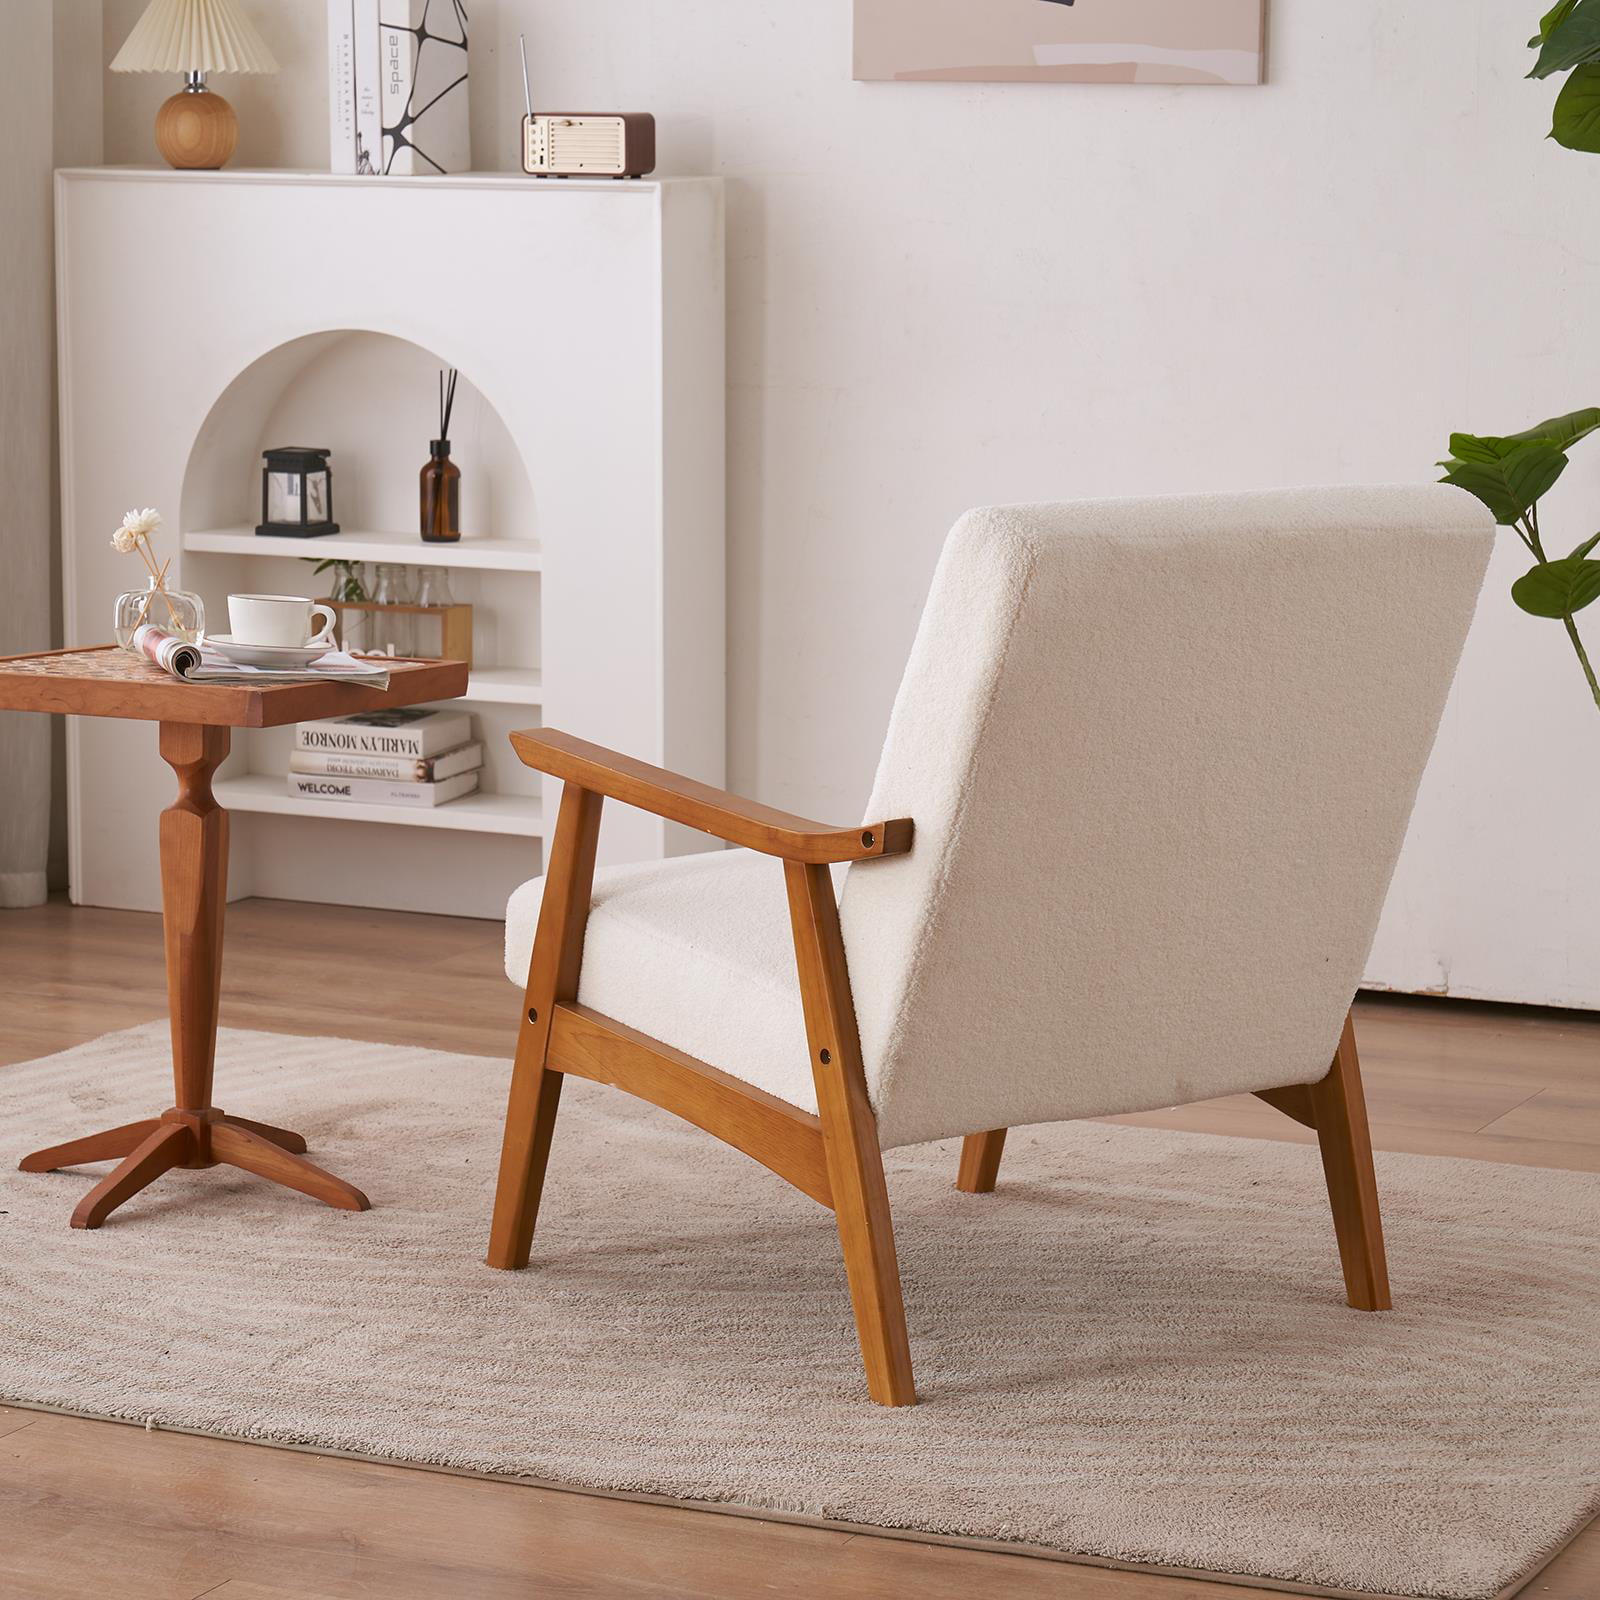 Ktaxon Mid-century Modern Arm Chair with Solid Wood Frame,Teddy